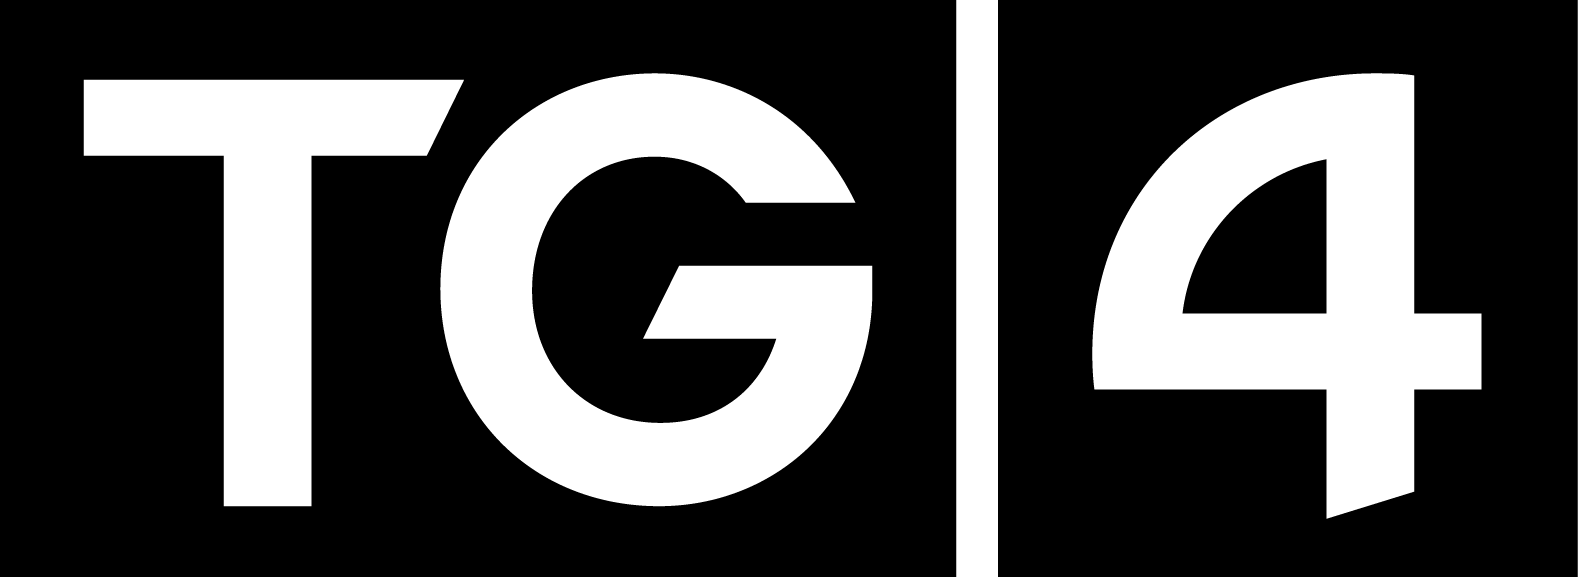 TG4 logo (solid-black) RGB.png